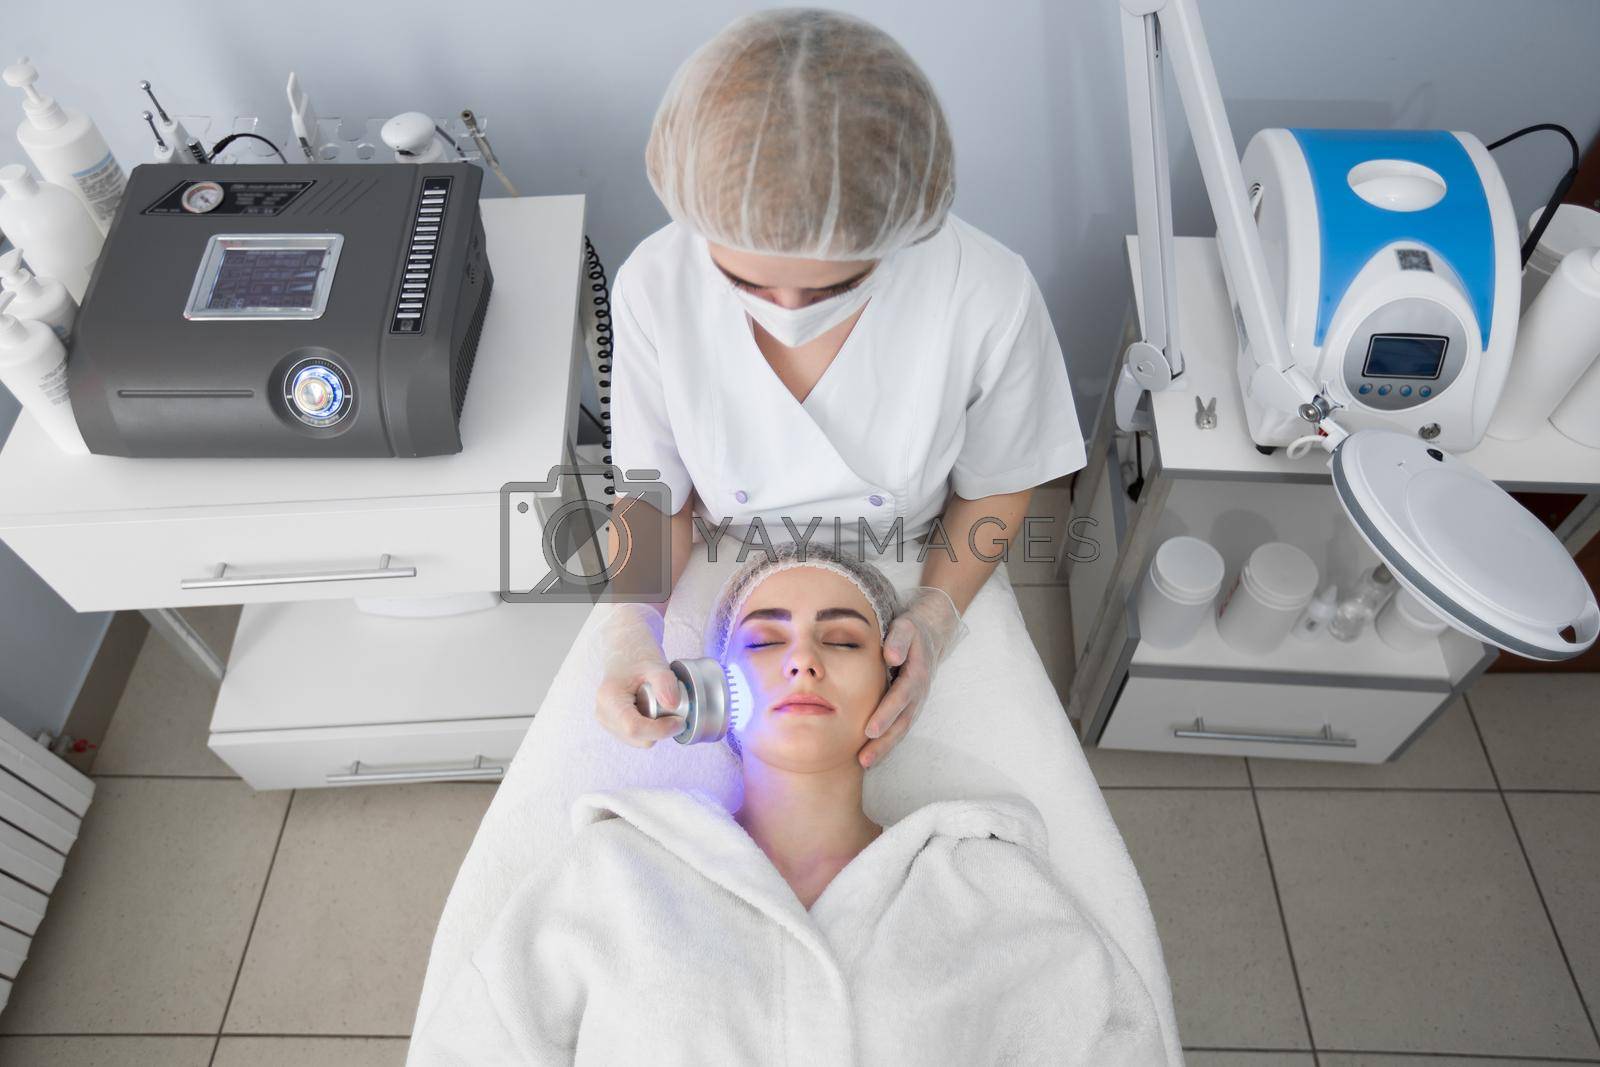 Ultrasonic massager. Light skin treatment, the woman in the beauty salon